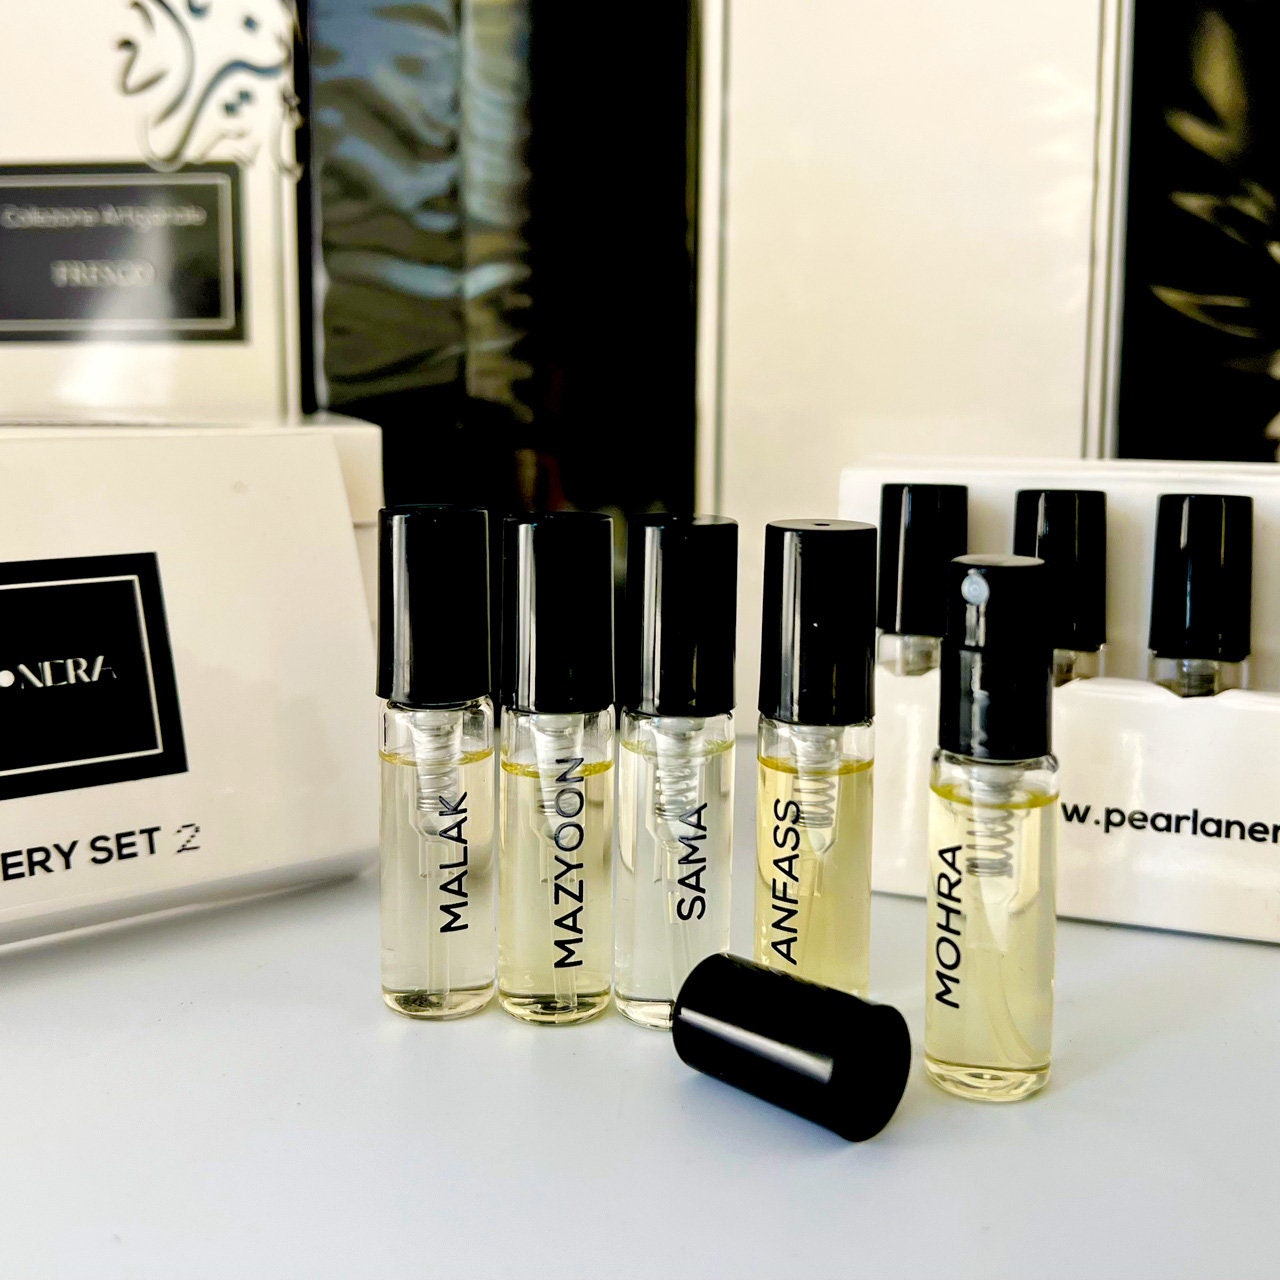 20 PEARLANERA Arabian Designer EDP Fragrance Sample Set. All 